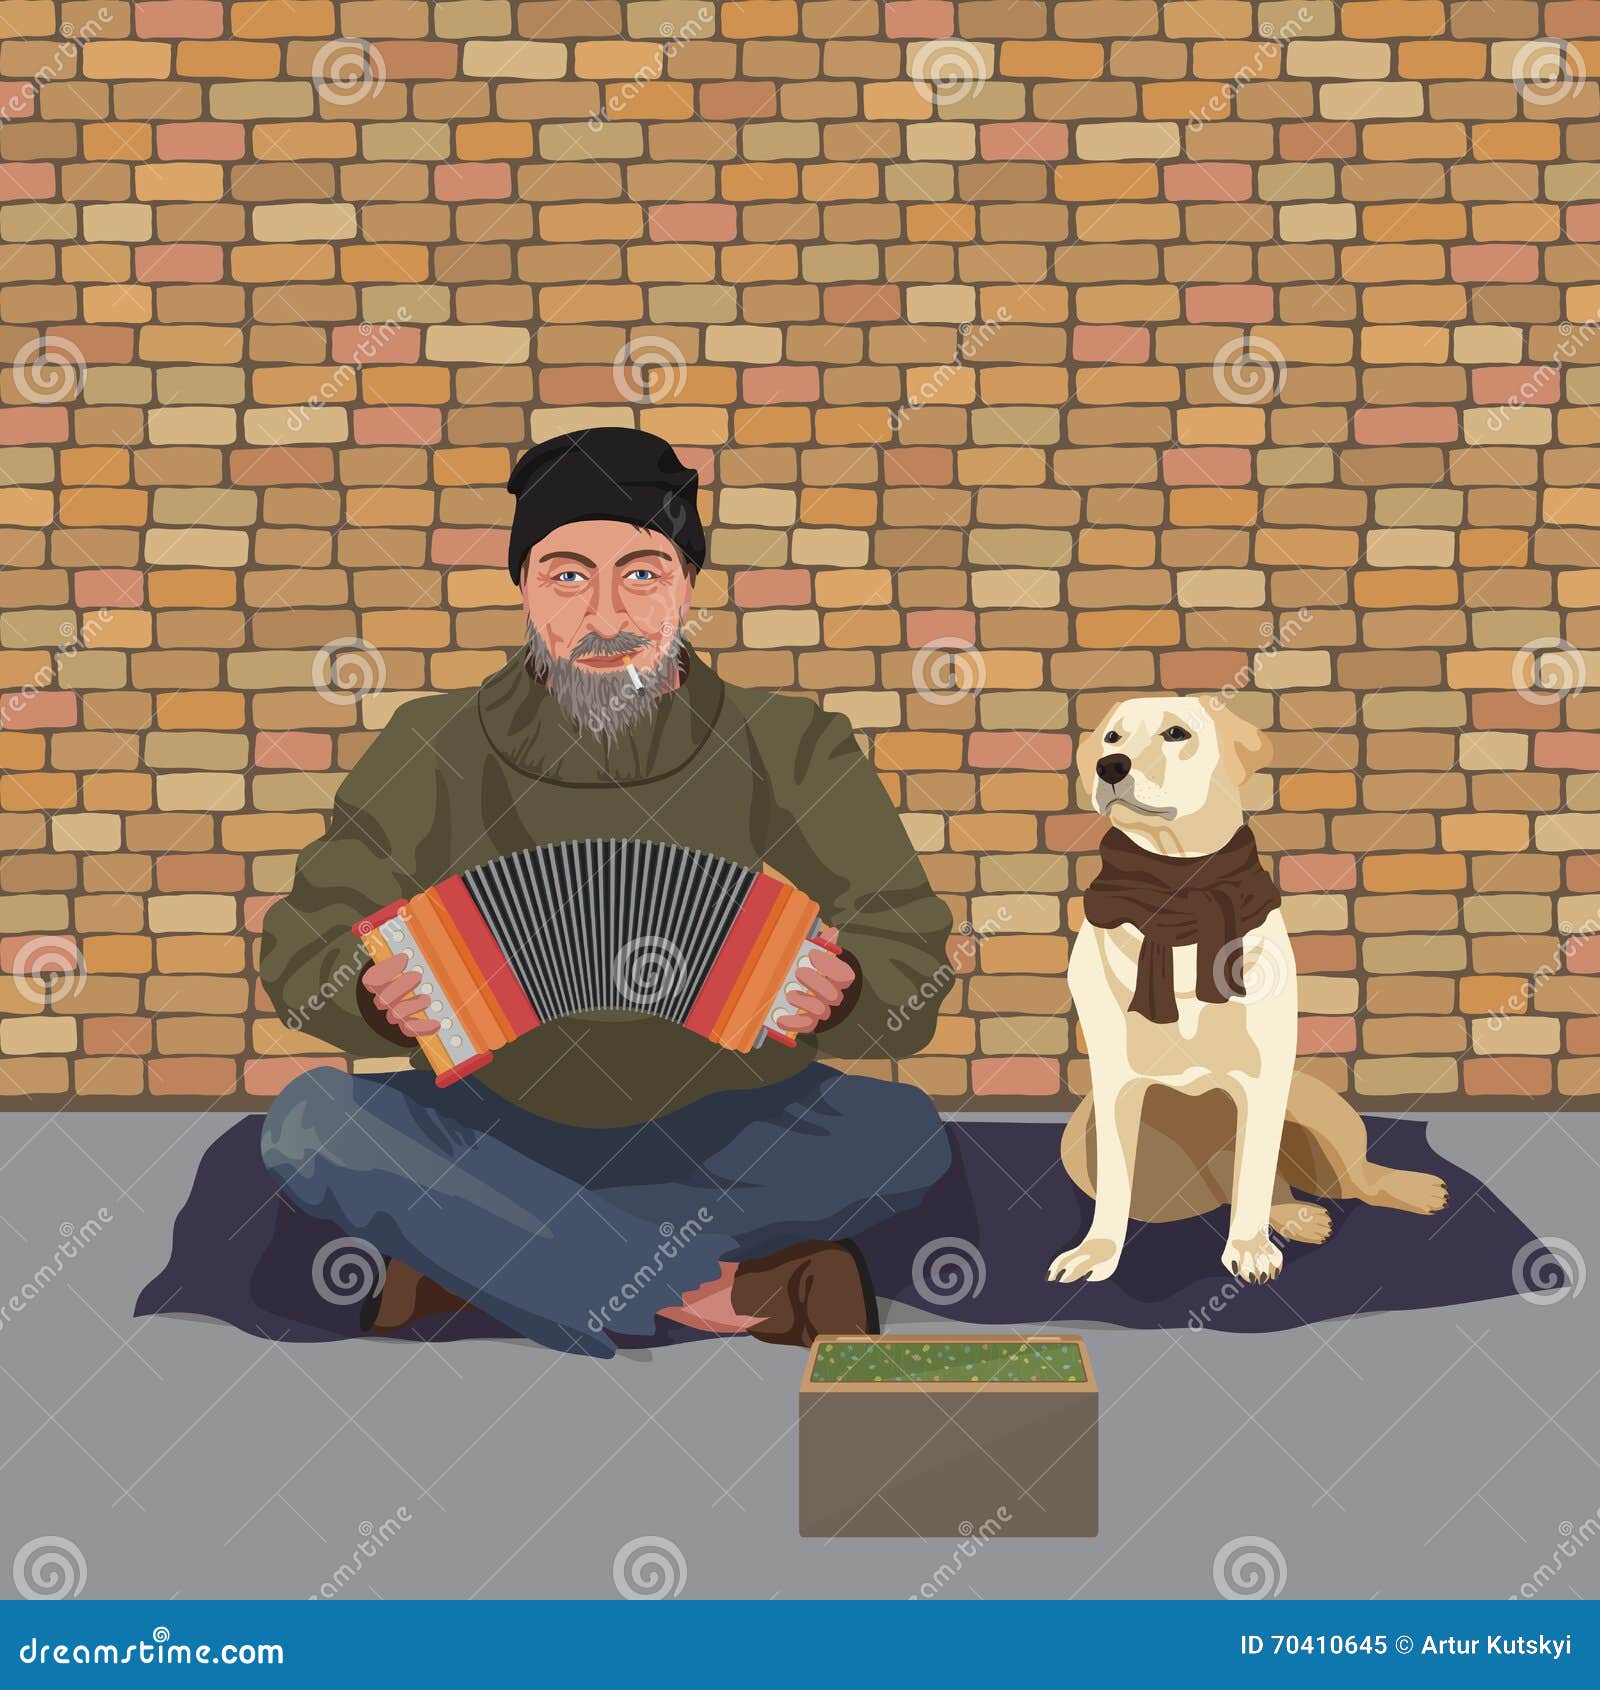 homeless-man-dog-shaggy-man-dirty-rags-playing-accordion-harmony-asking-help-vector-illustration-70410645.jpg